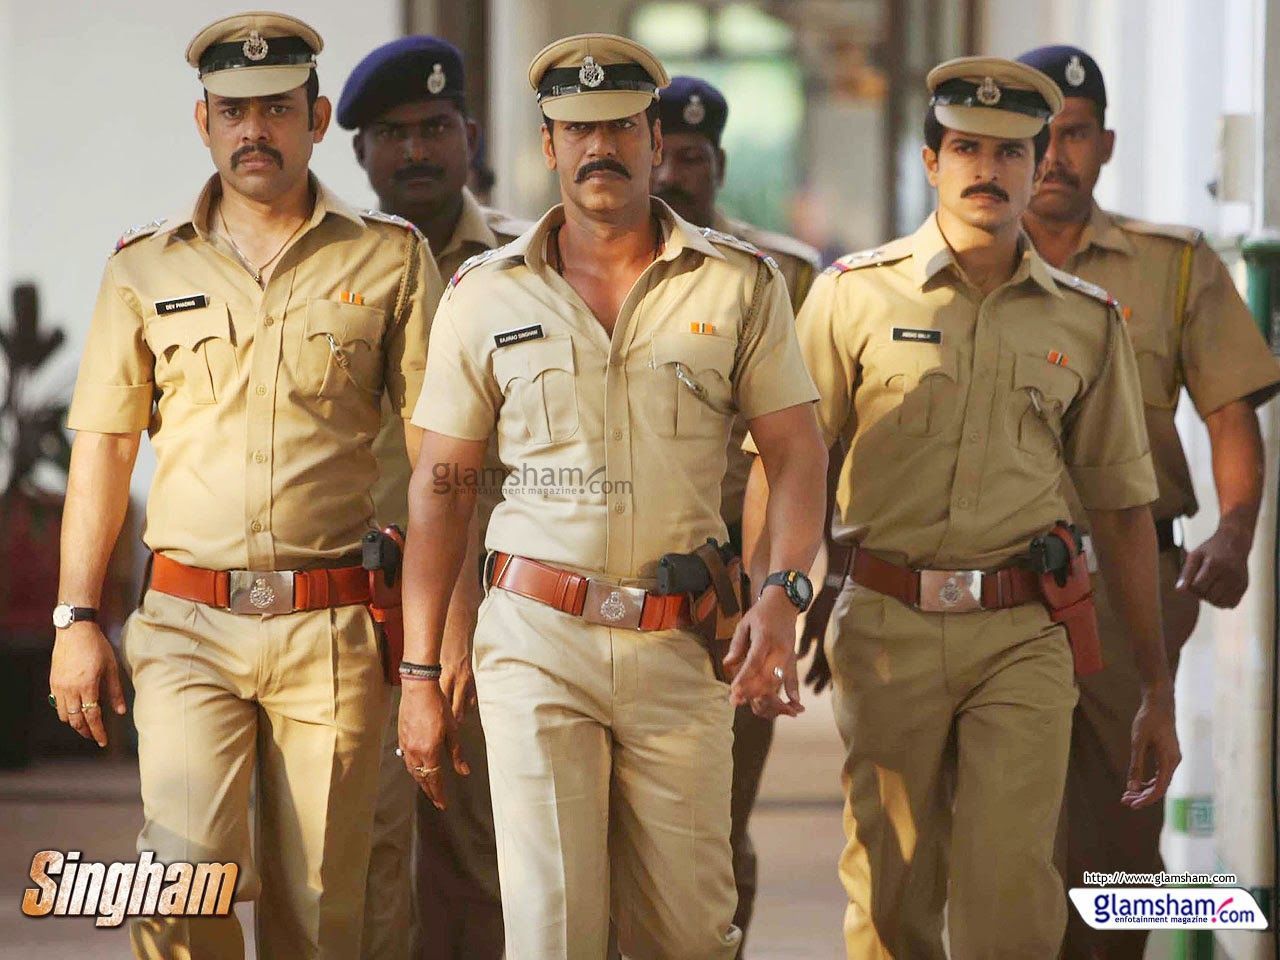 Daily Uniqe Wallpaper: Free* Singham Movie Wallpaper. Movie wallpaper, Bollywood action movies, Men in uniform